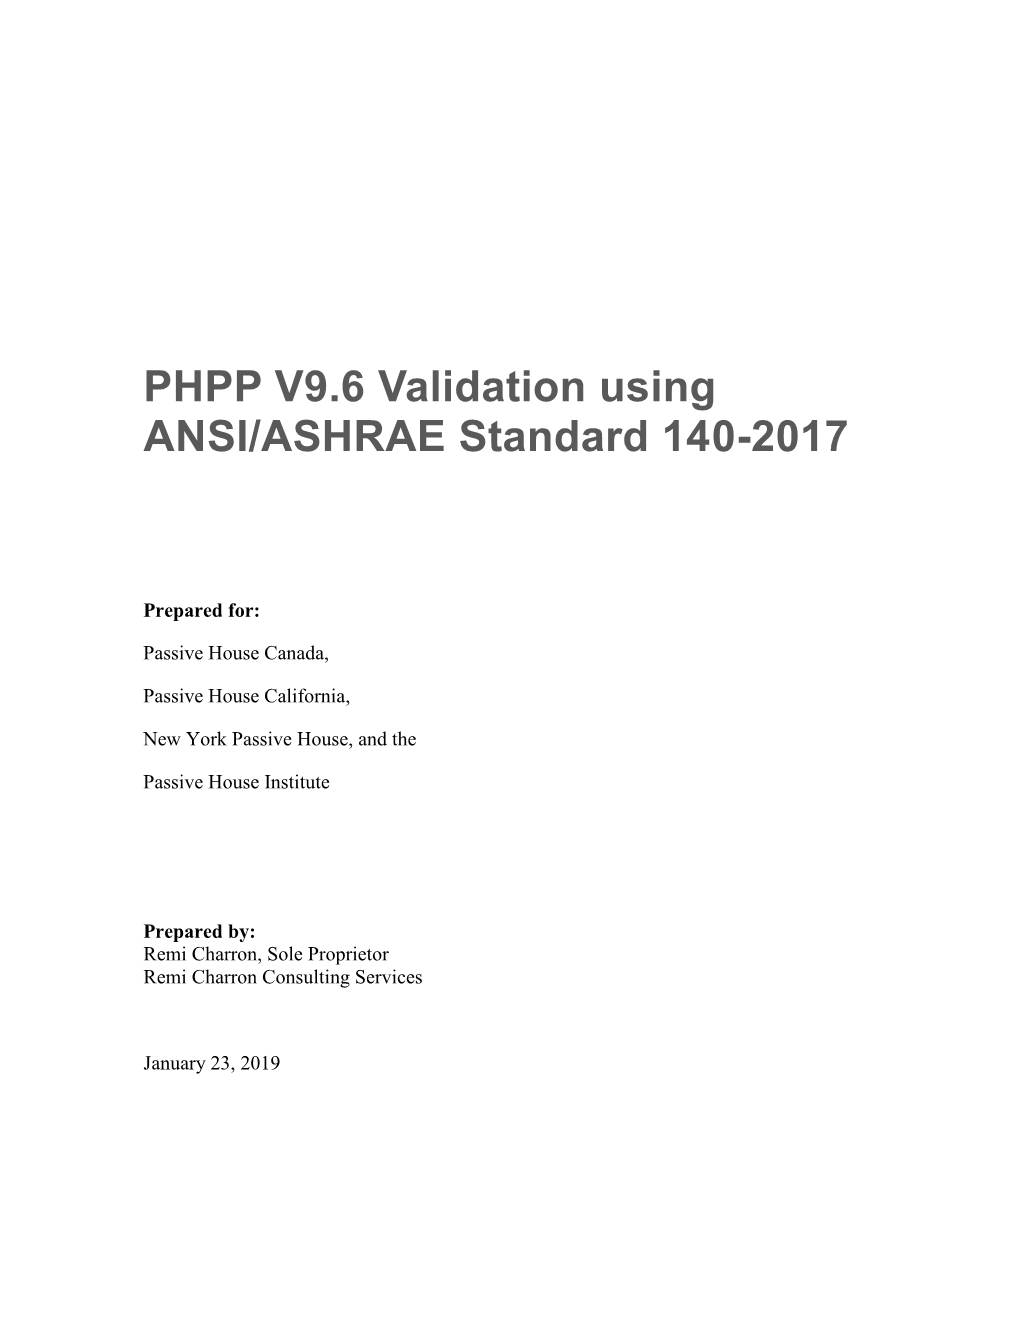 PHPP V9.6 Validation Using ANSI/ASHRAE Standard 140-2017